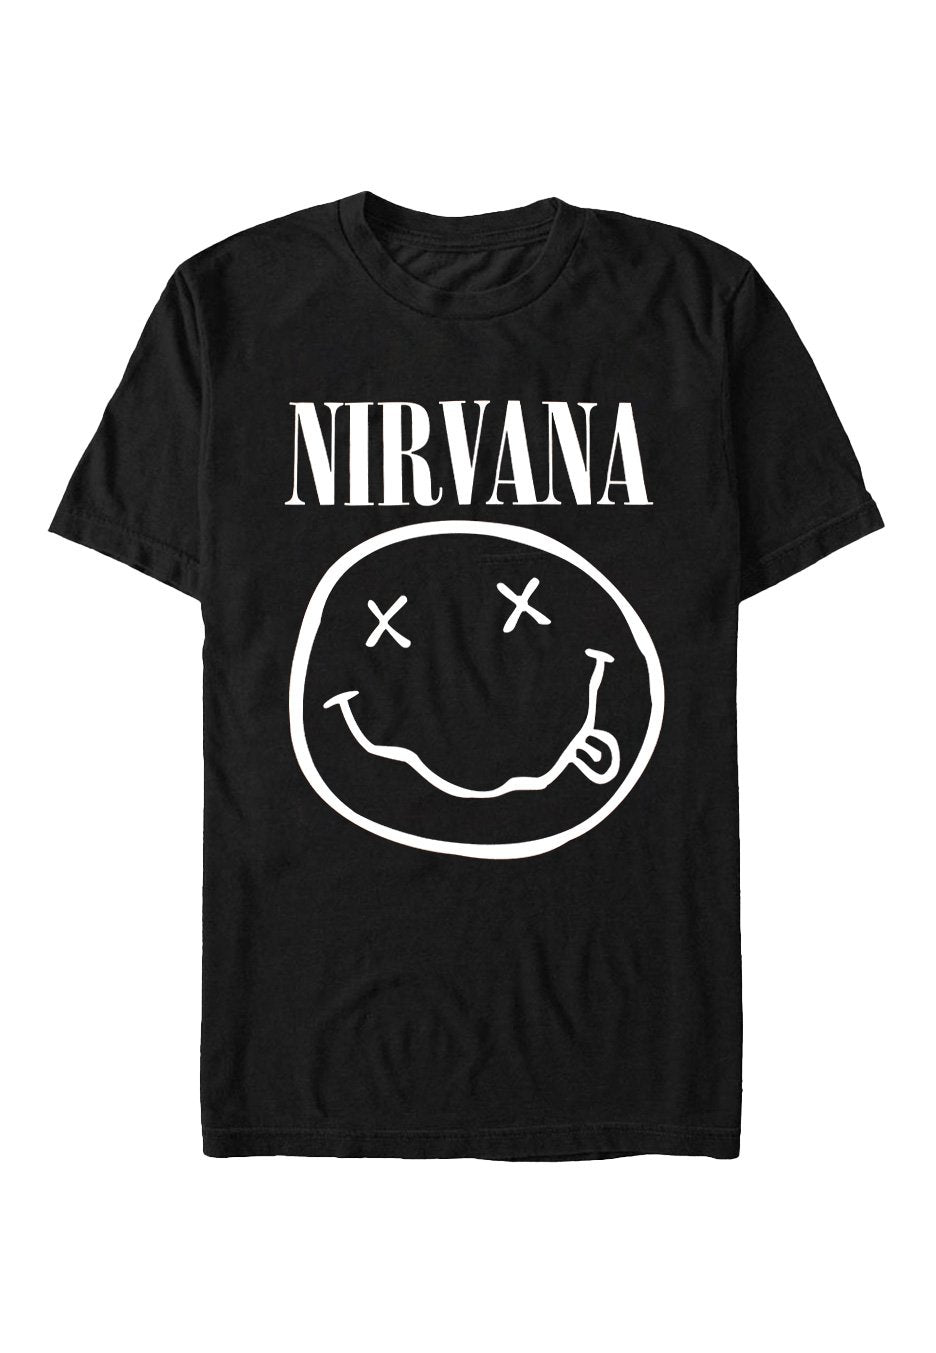 Nirvana - White Happy Face - T-Shirt